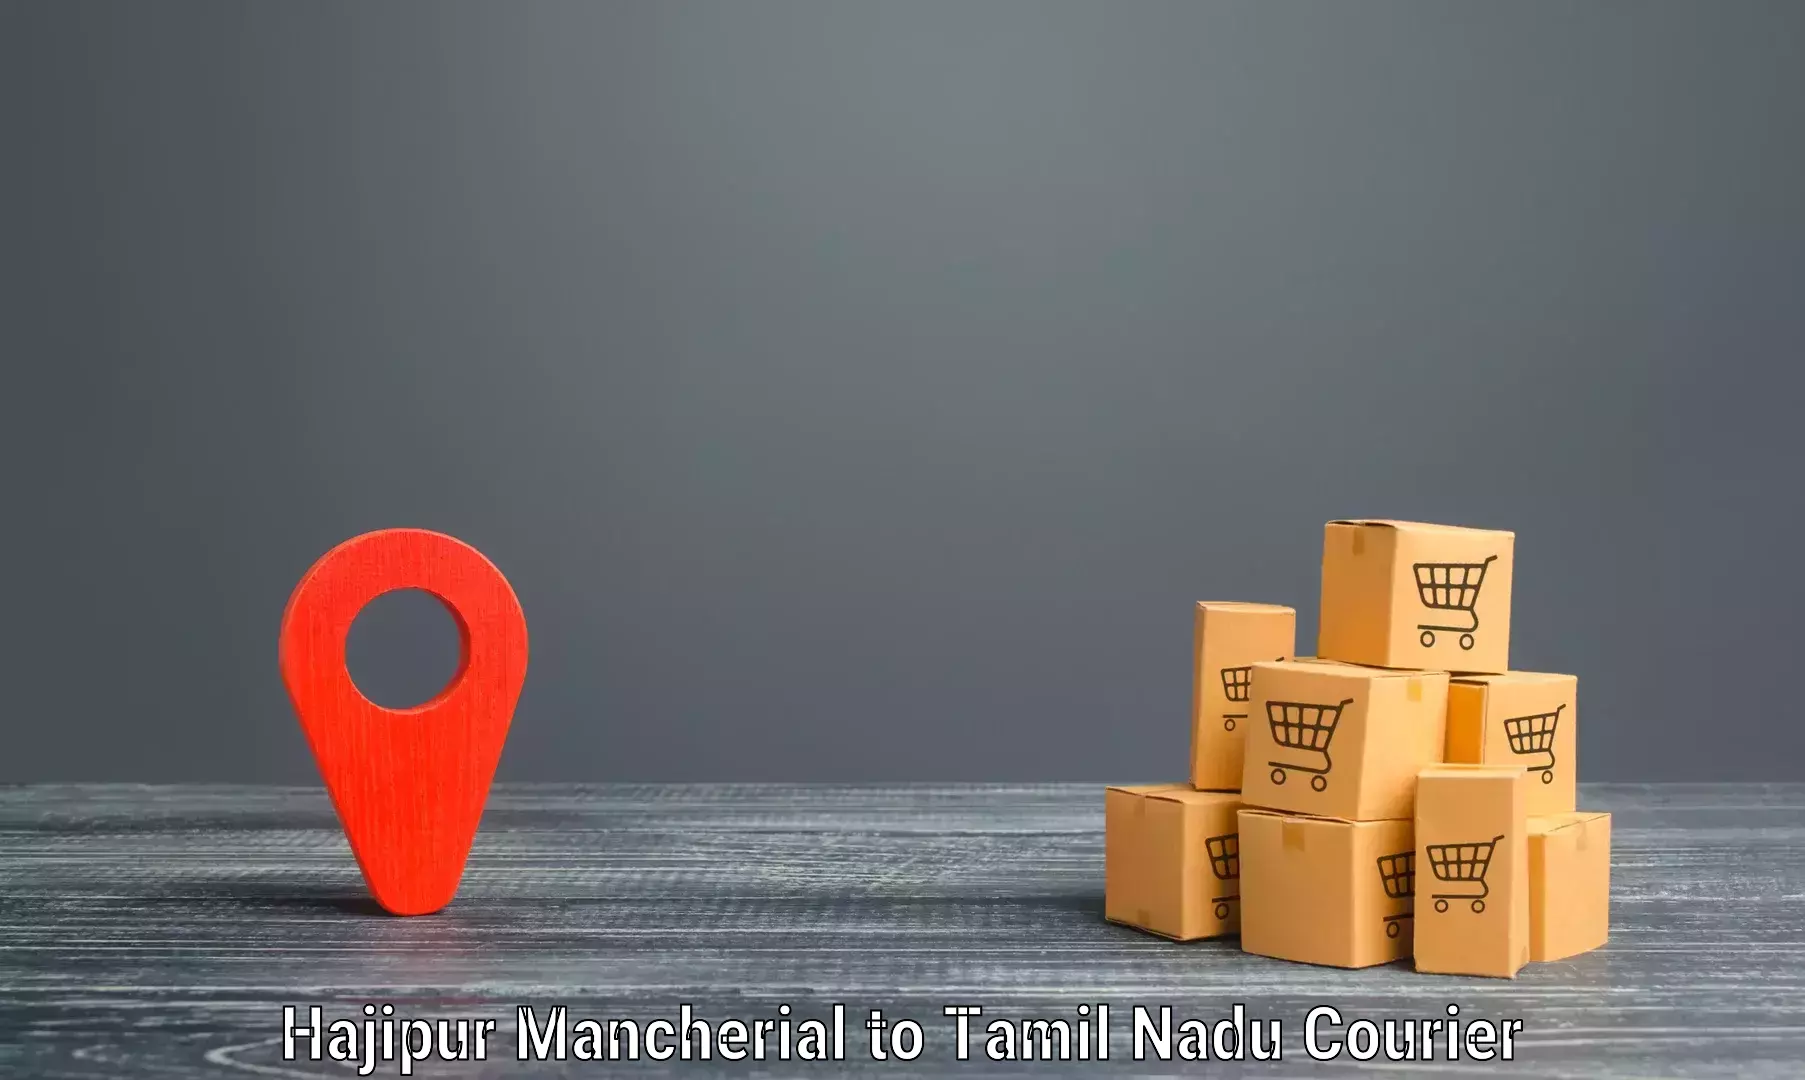 Next-day delivery options Hajipur Mancherial to Tiruchendur